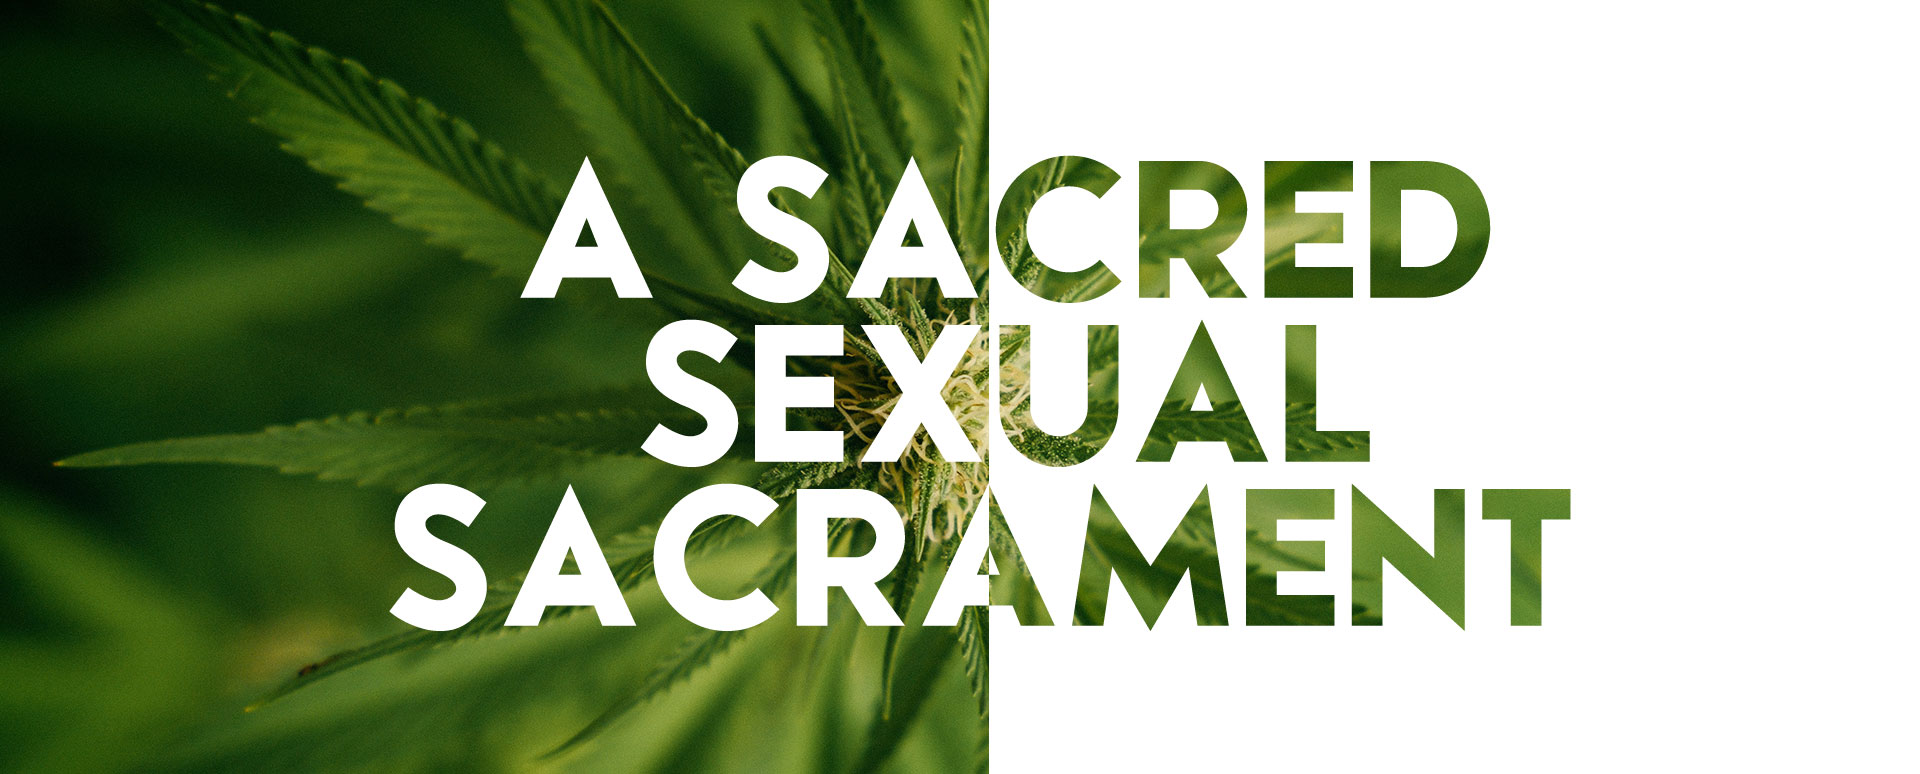 A Sacred Sexual Sacrament